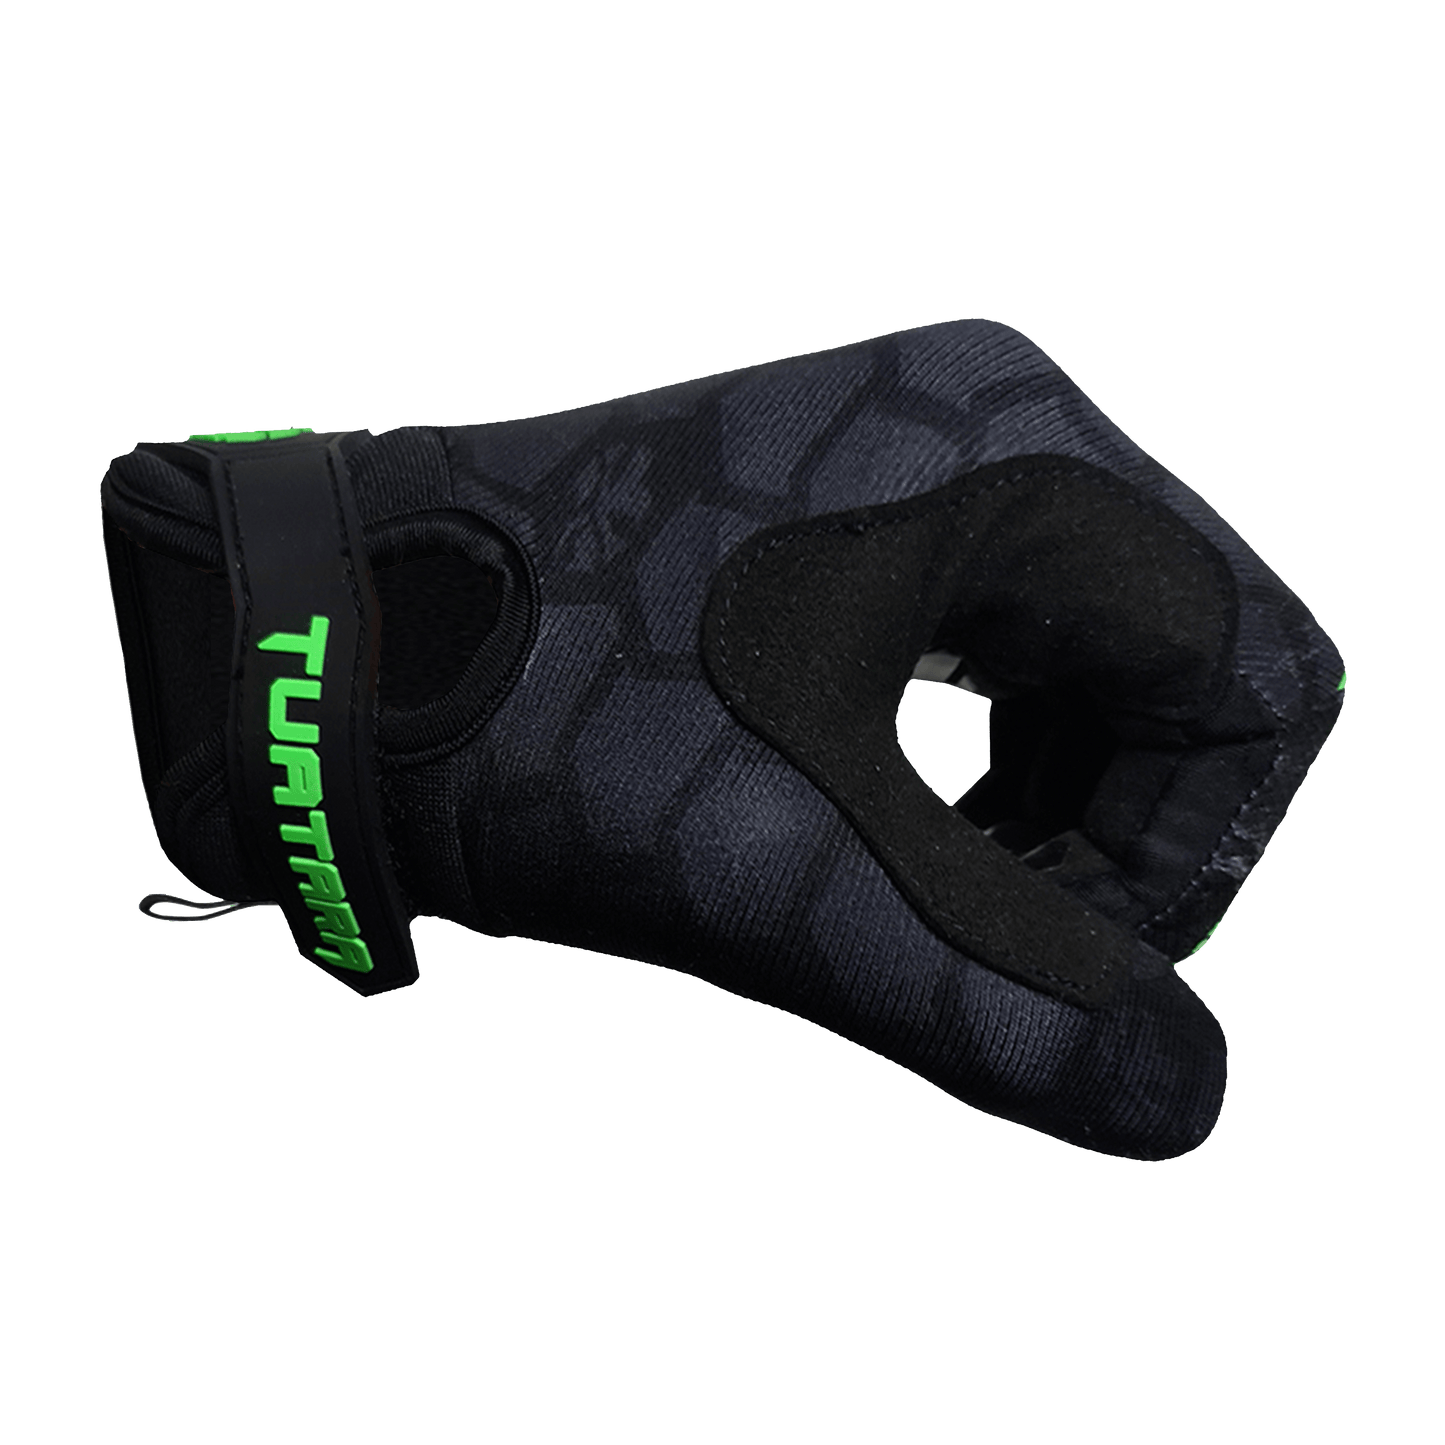 Tuatara Sim Racing Gloves REPTILE Fist